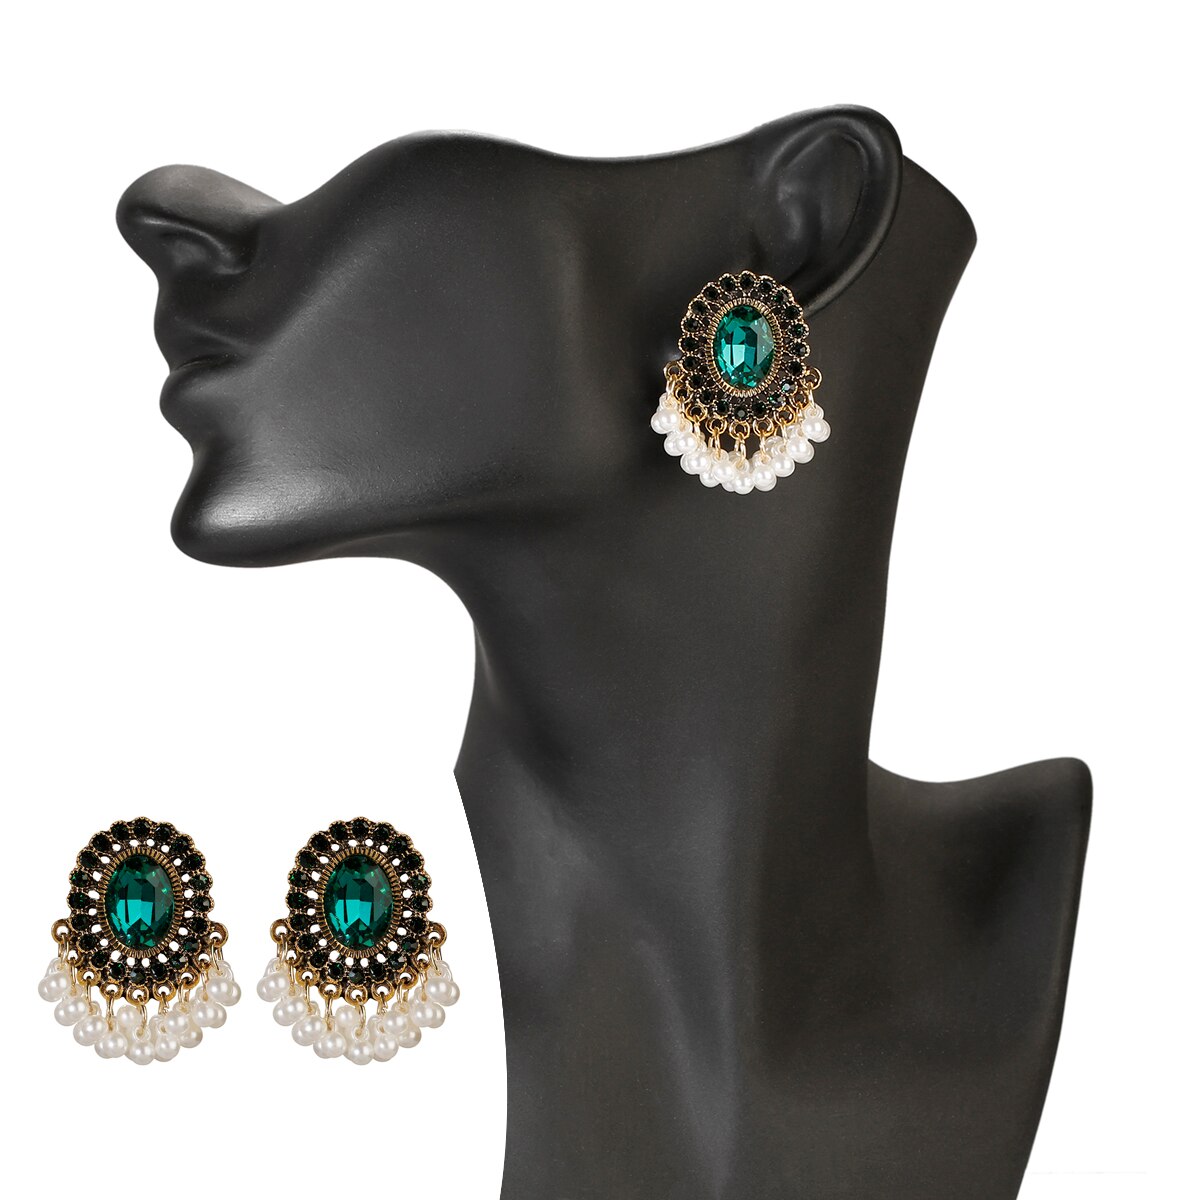 Classic-Blue-Crystal-Indian-Earrings-For-Women-Pendientes-Luxury-Pearl-Tassel-Earrings-Jewelry-Brinc-1005003753178643-8